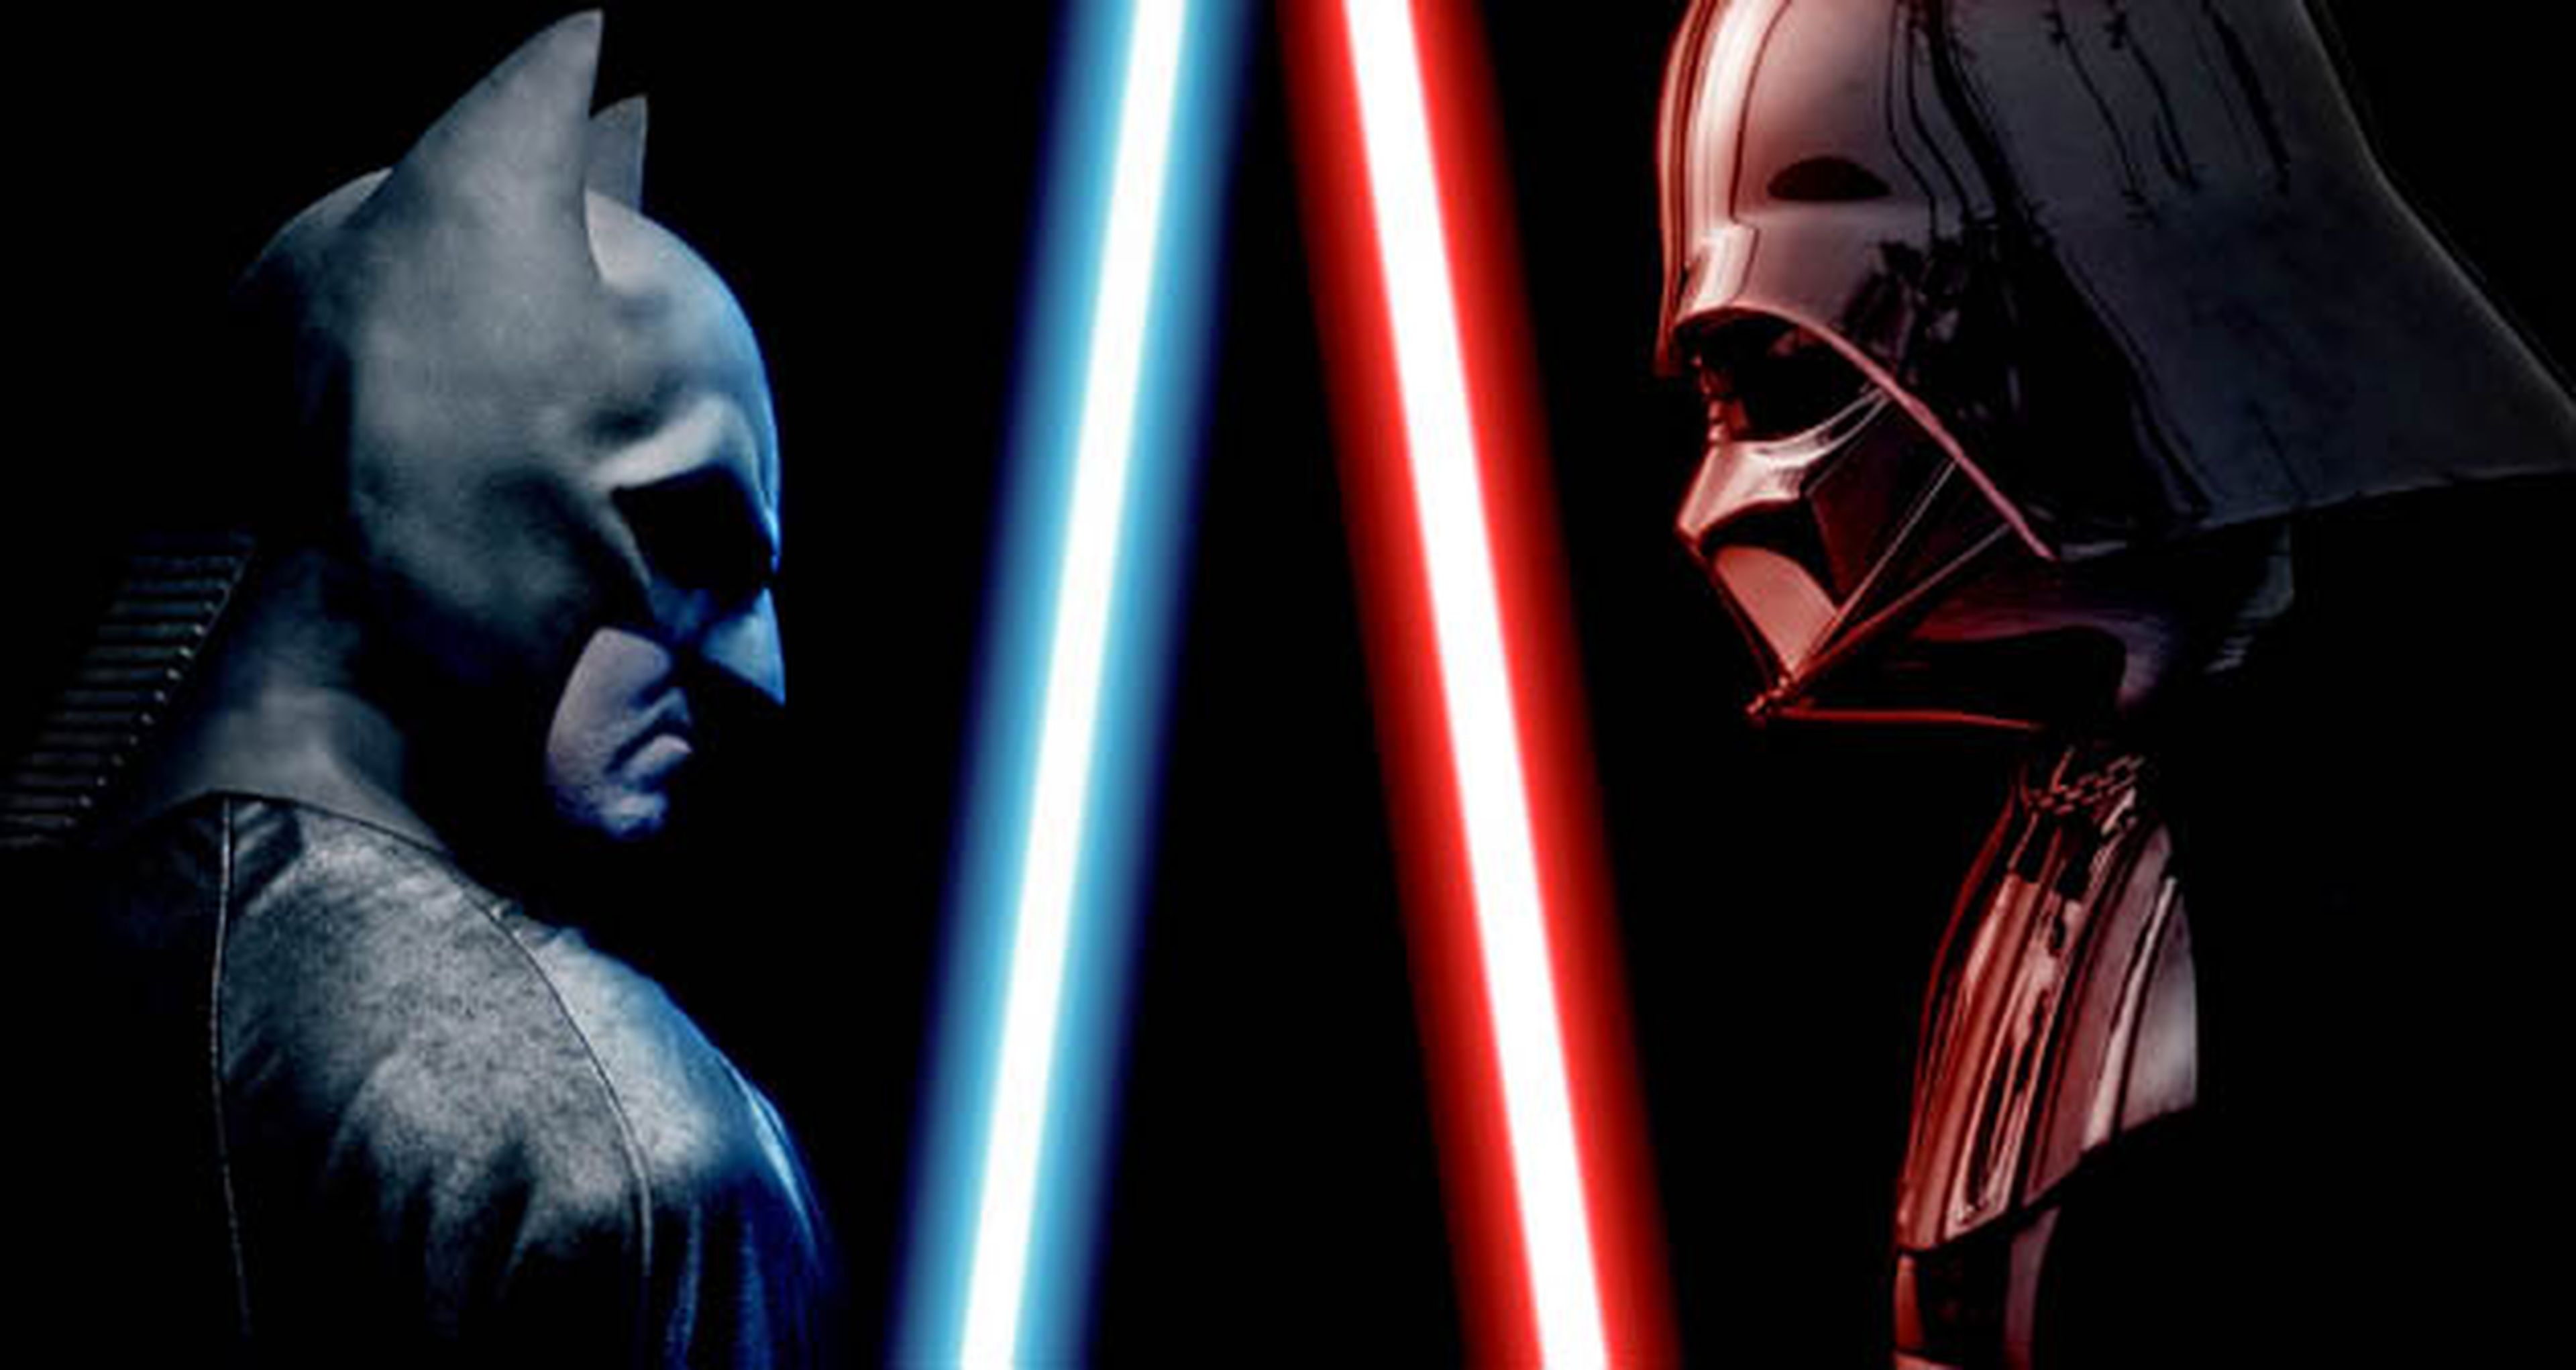 Batman vs. Darth Vader: FINAL ALTERNATIVO del duelo definitivo